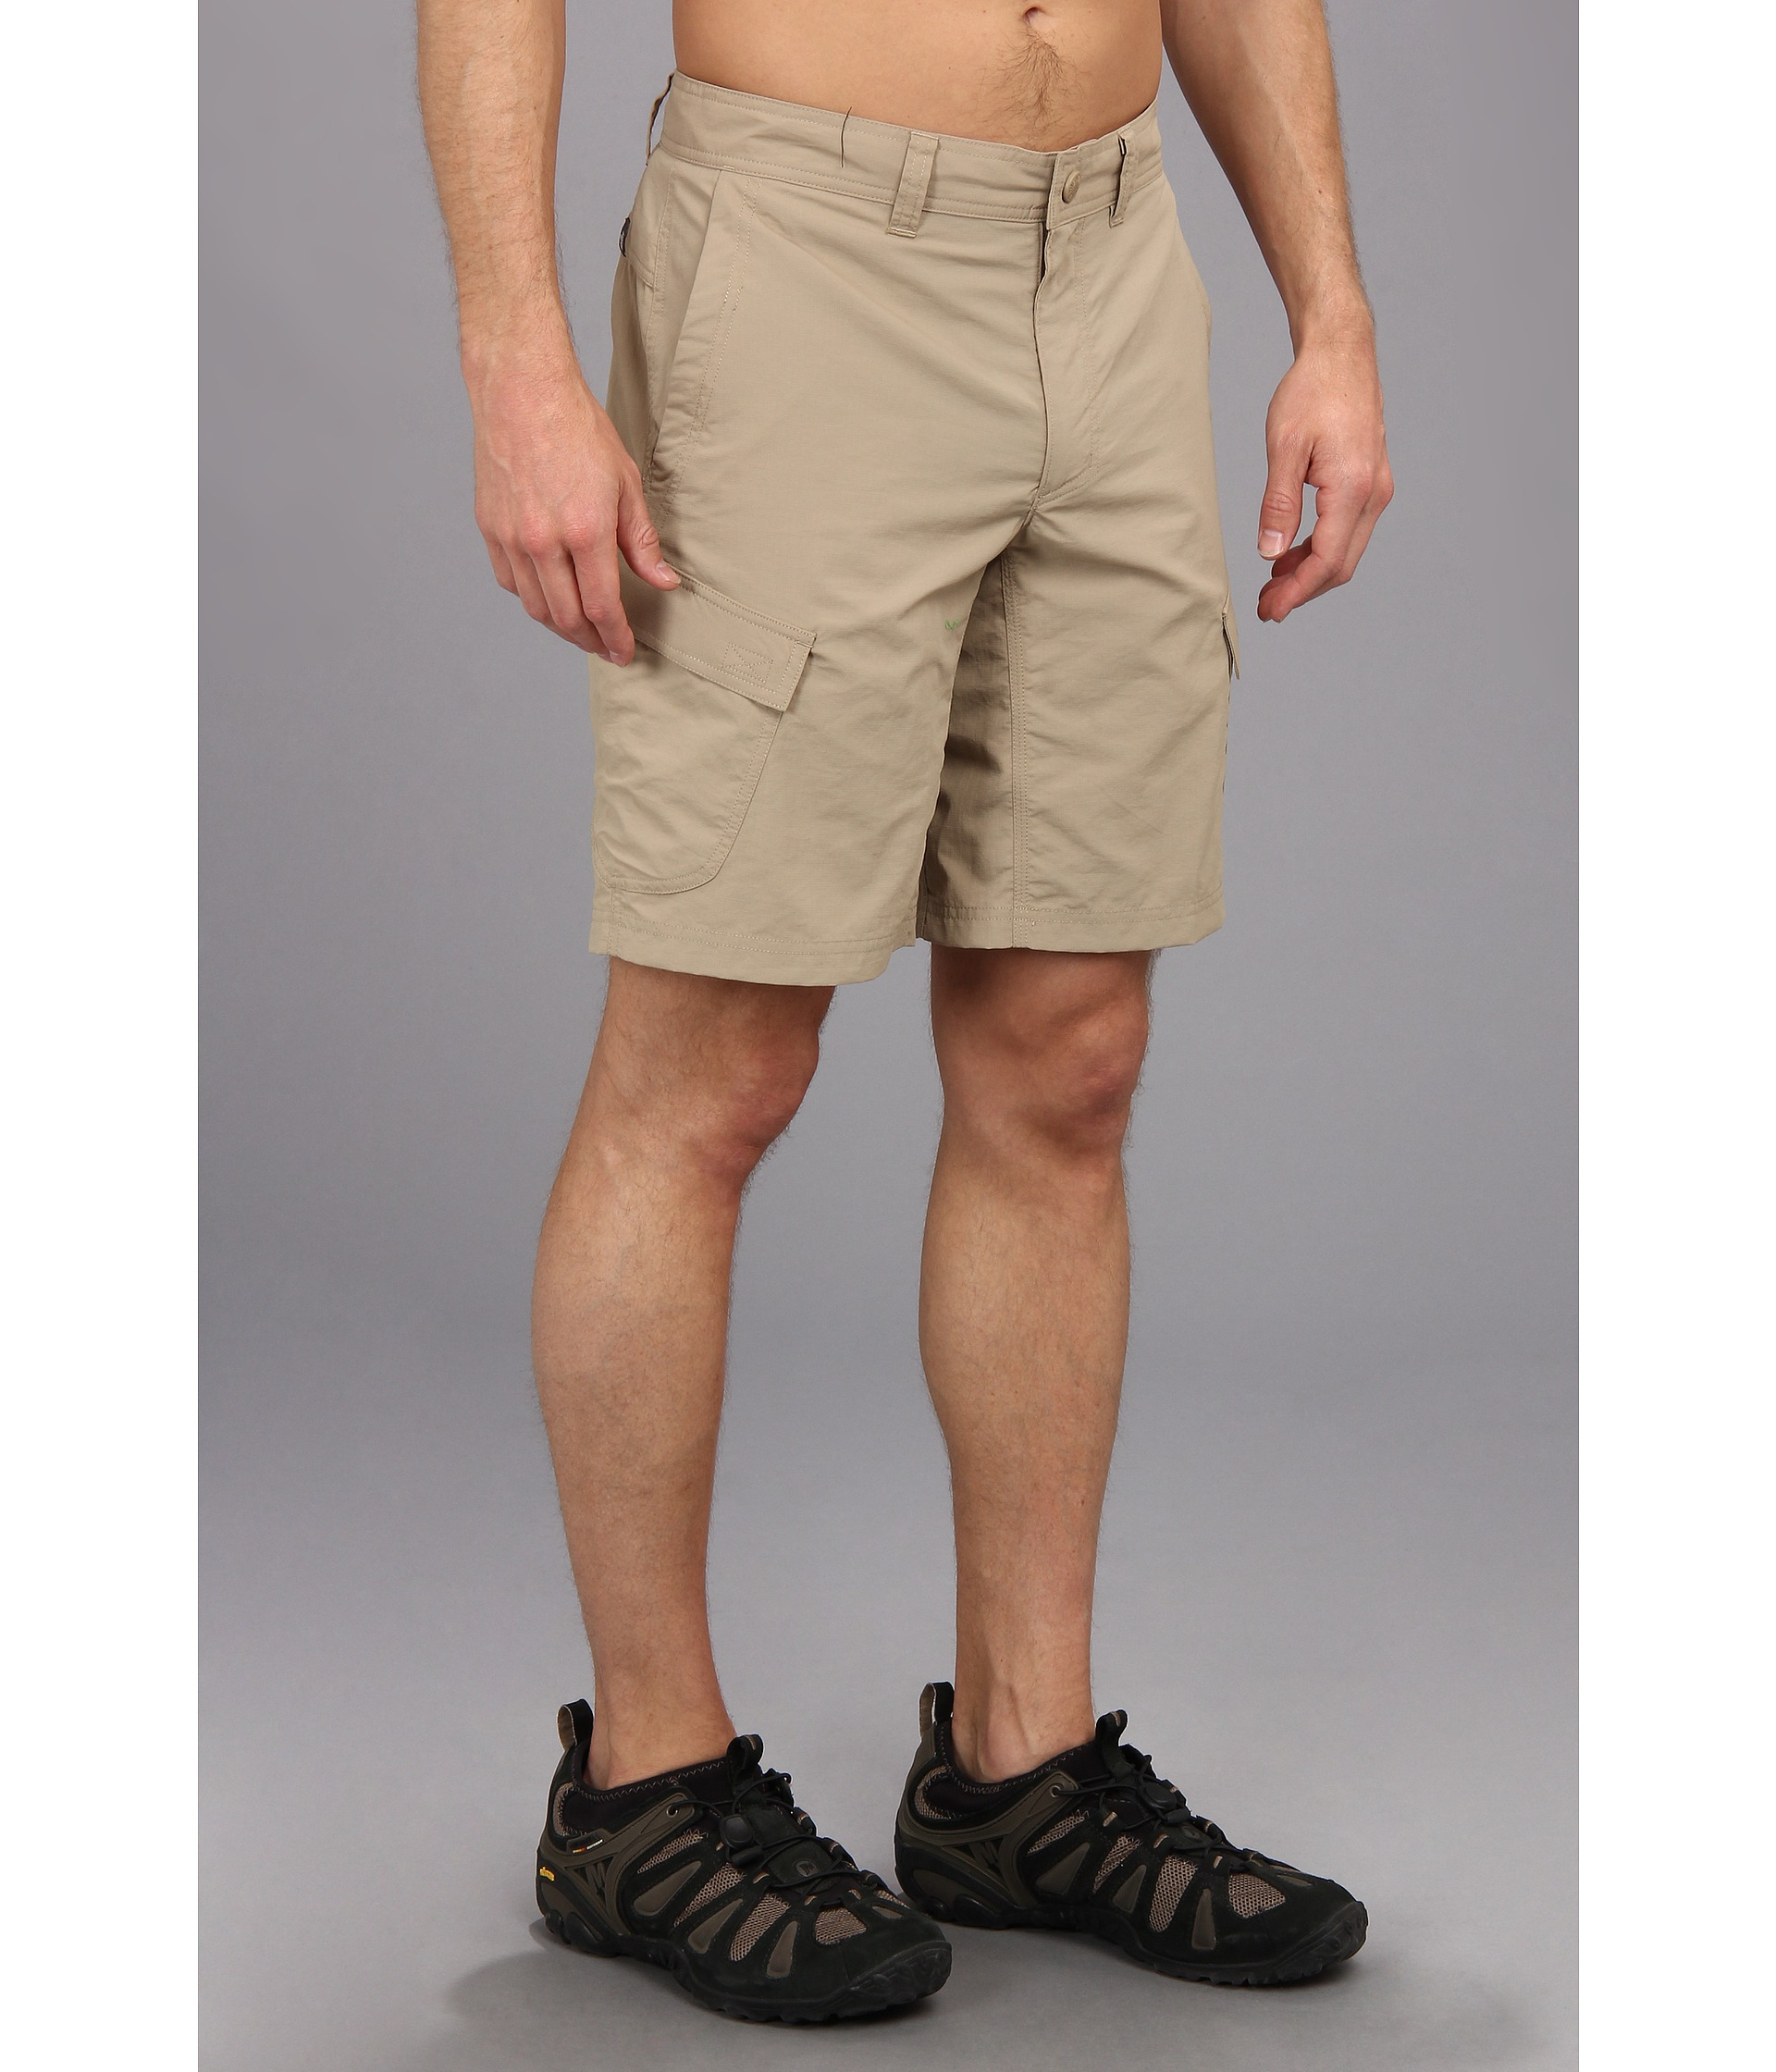 north face men's horizon shorts